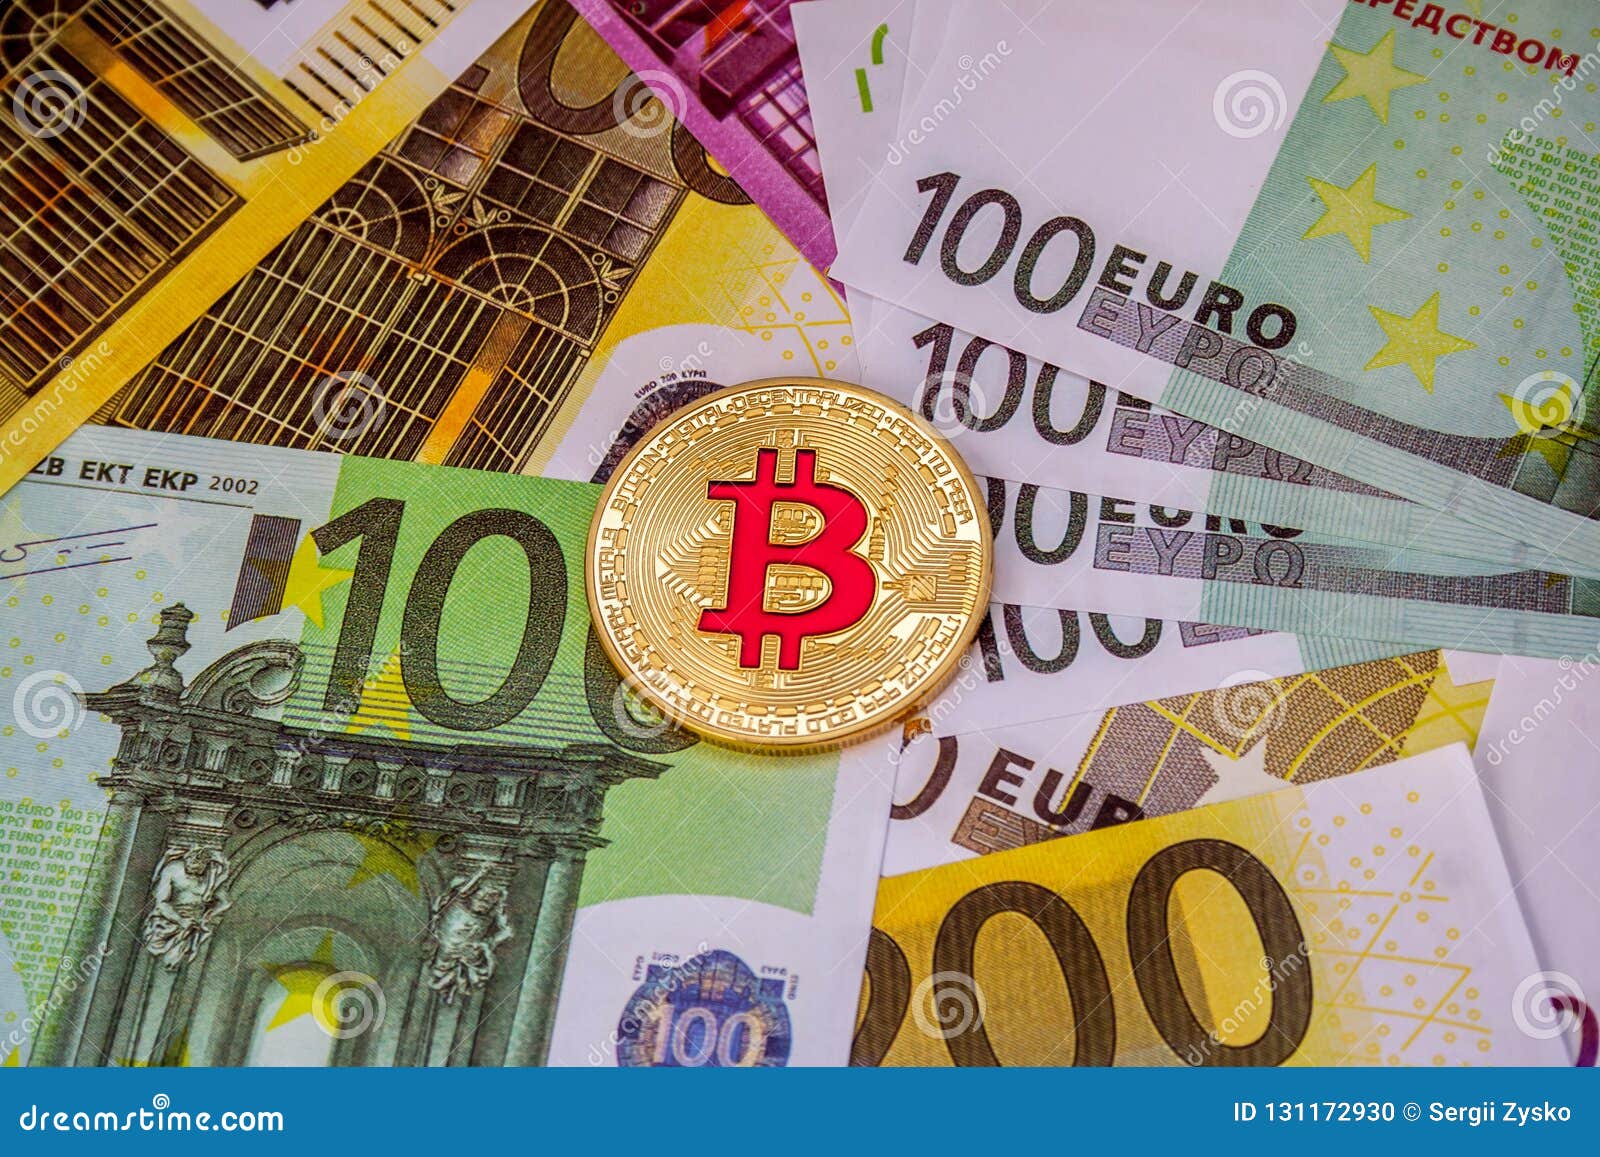 bitcoin cash price euro